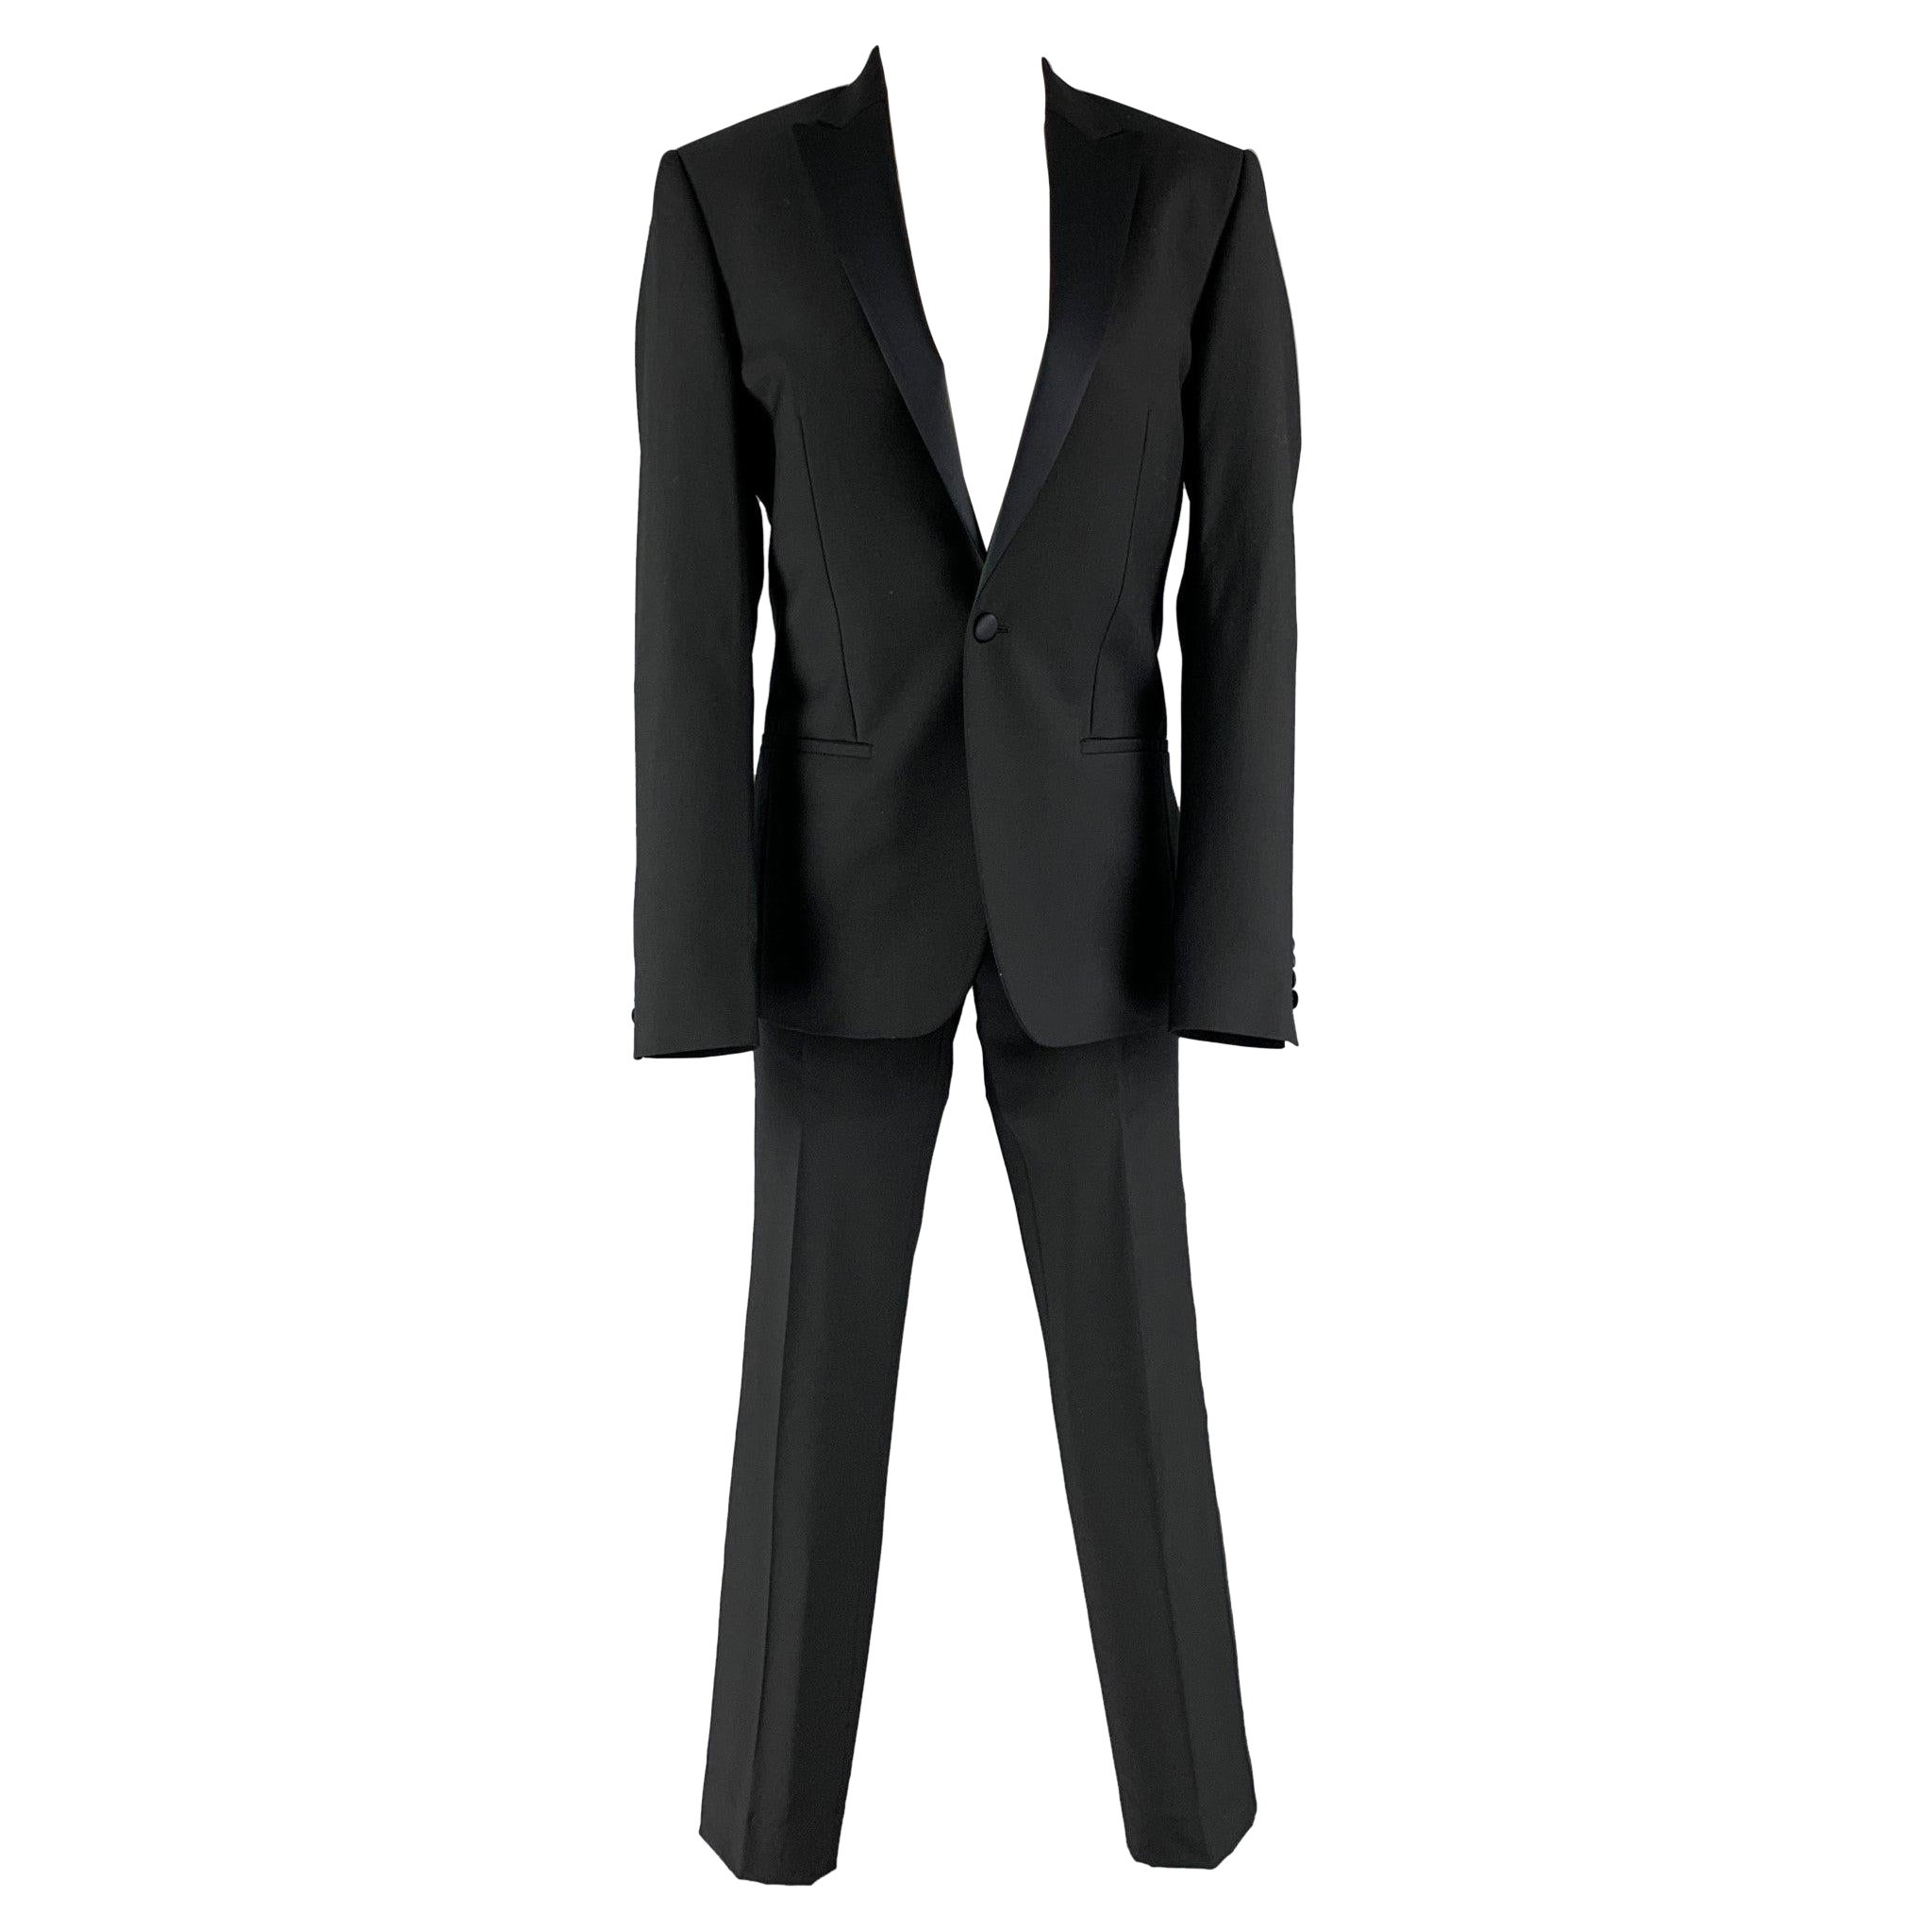 CALVIN KLEIN COLLECTION Size 34 Black Solid Wool Peak Lapel Tuxedo For Sale